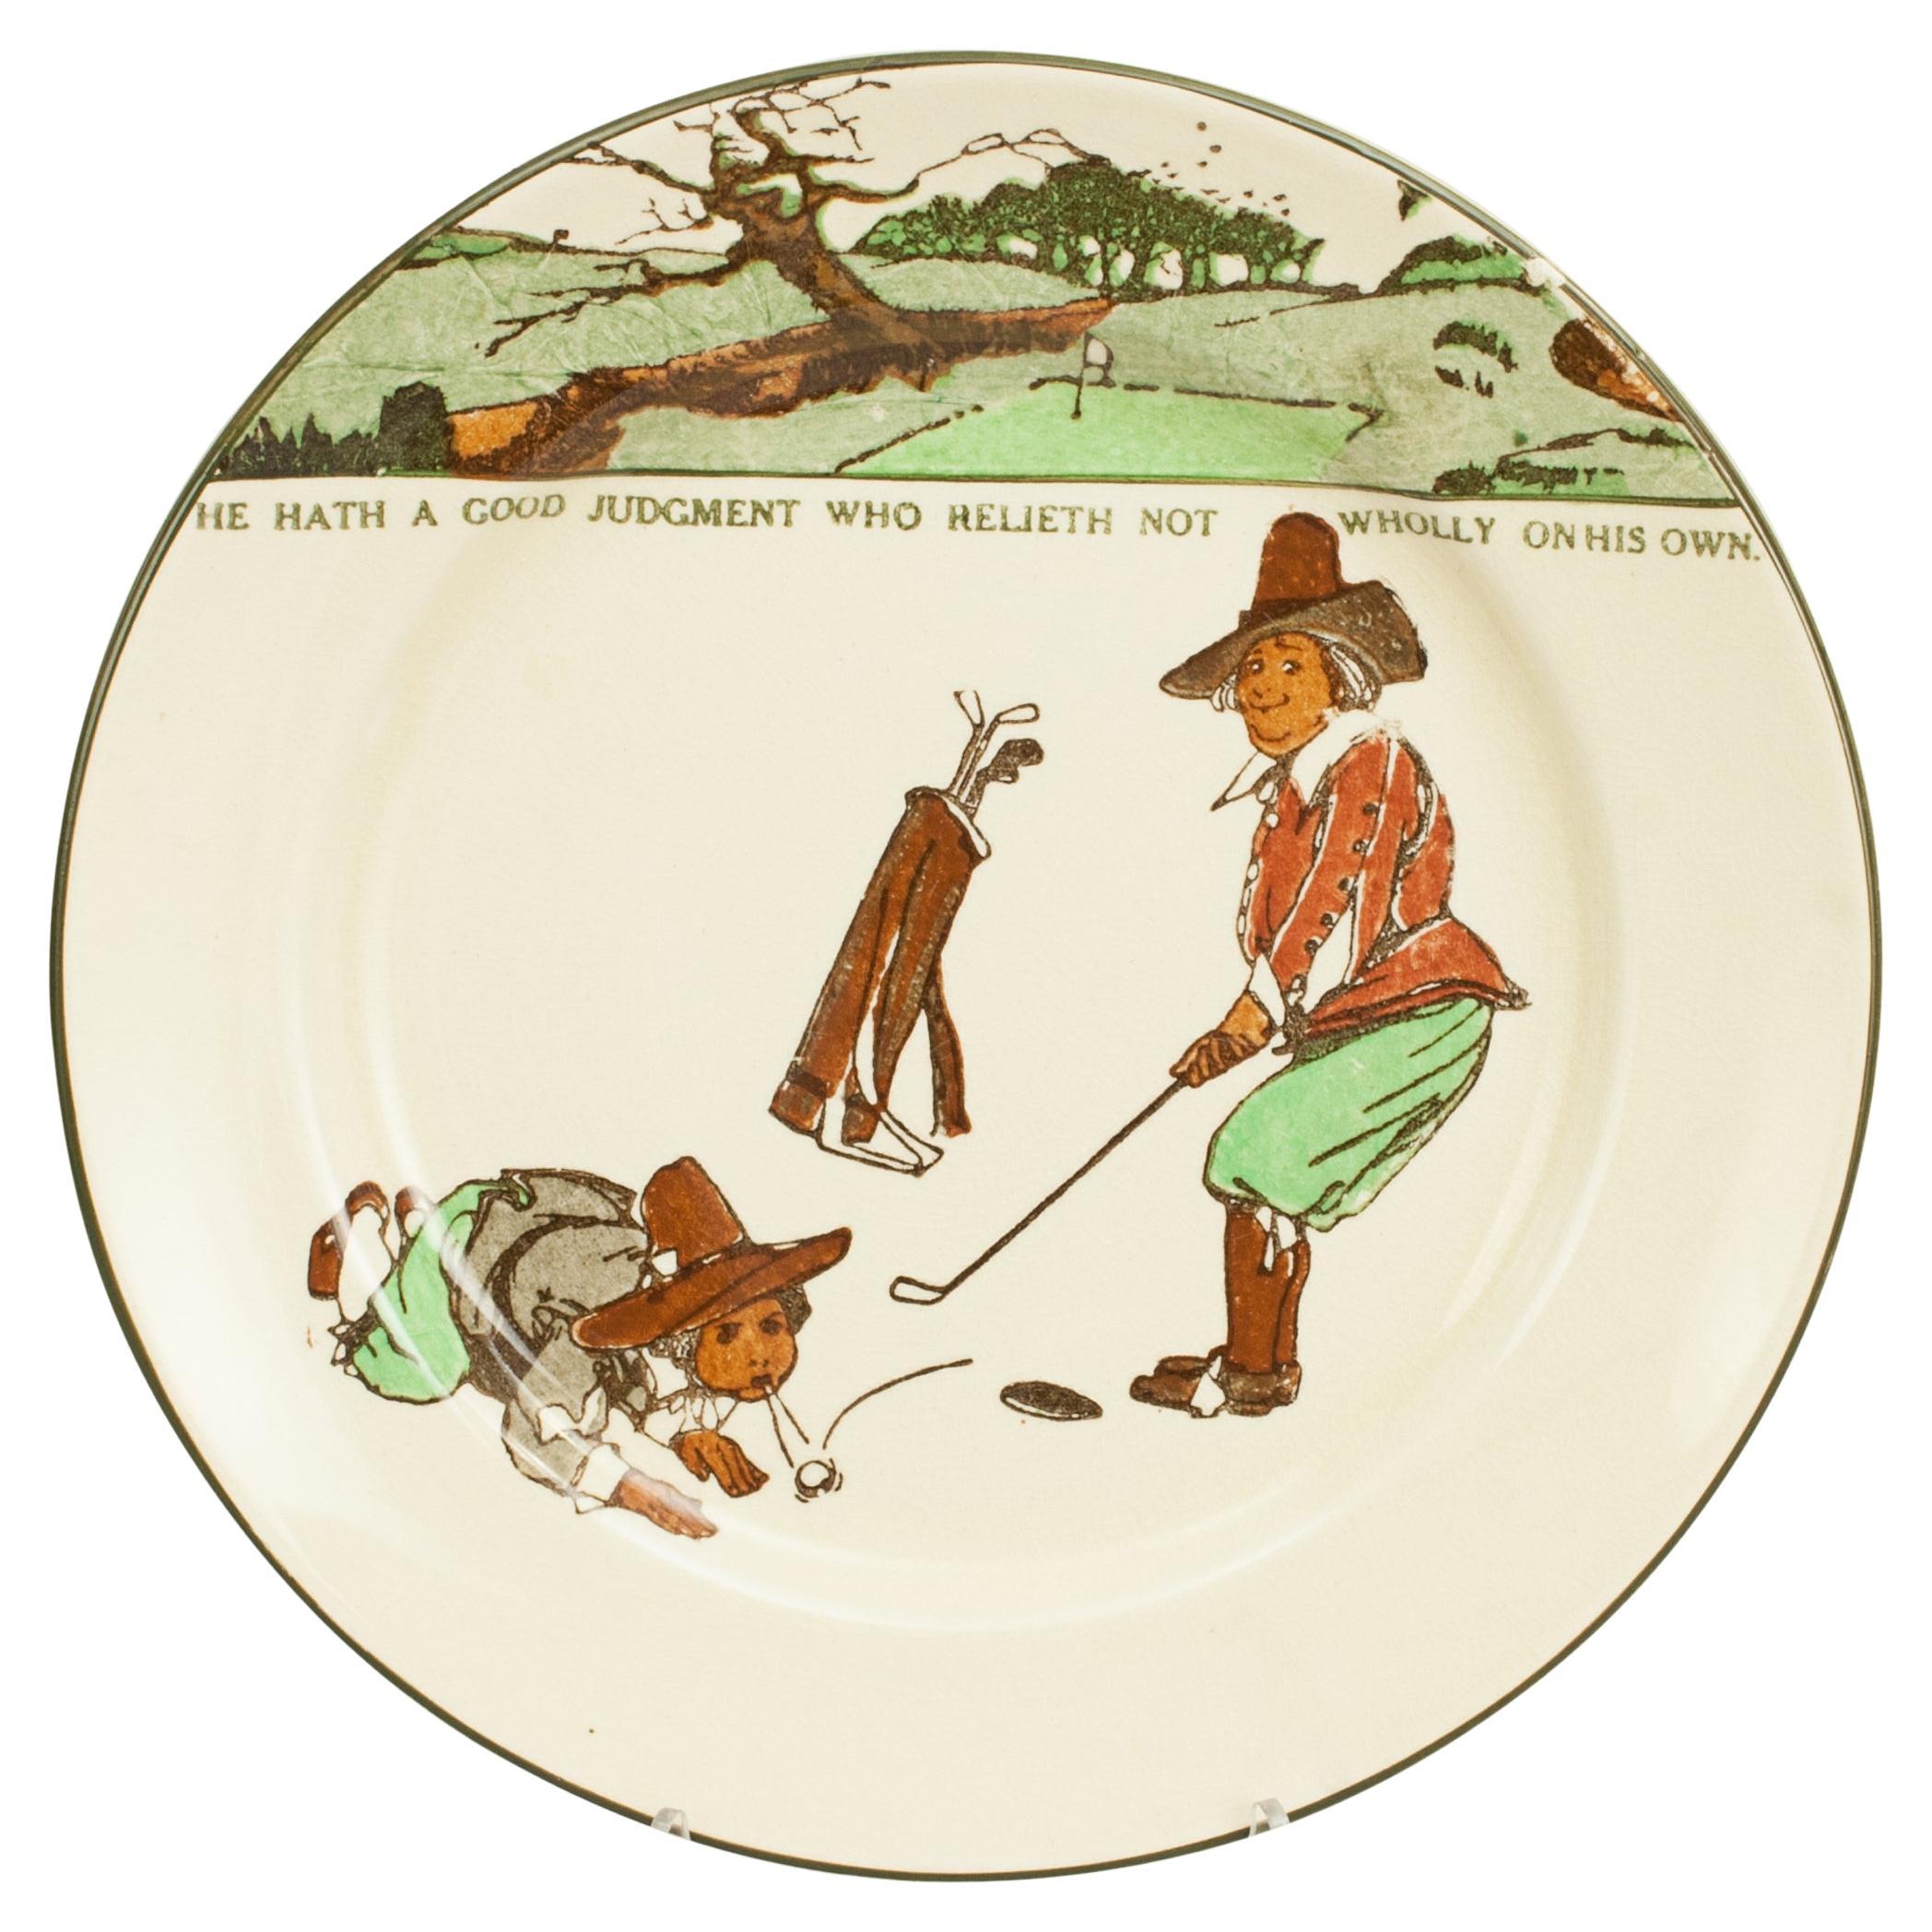 Royal Doulton Golf Plate, Series Ware